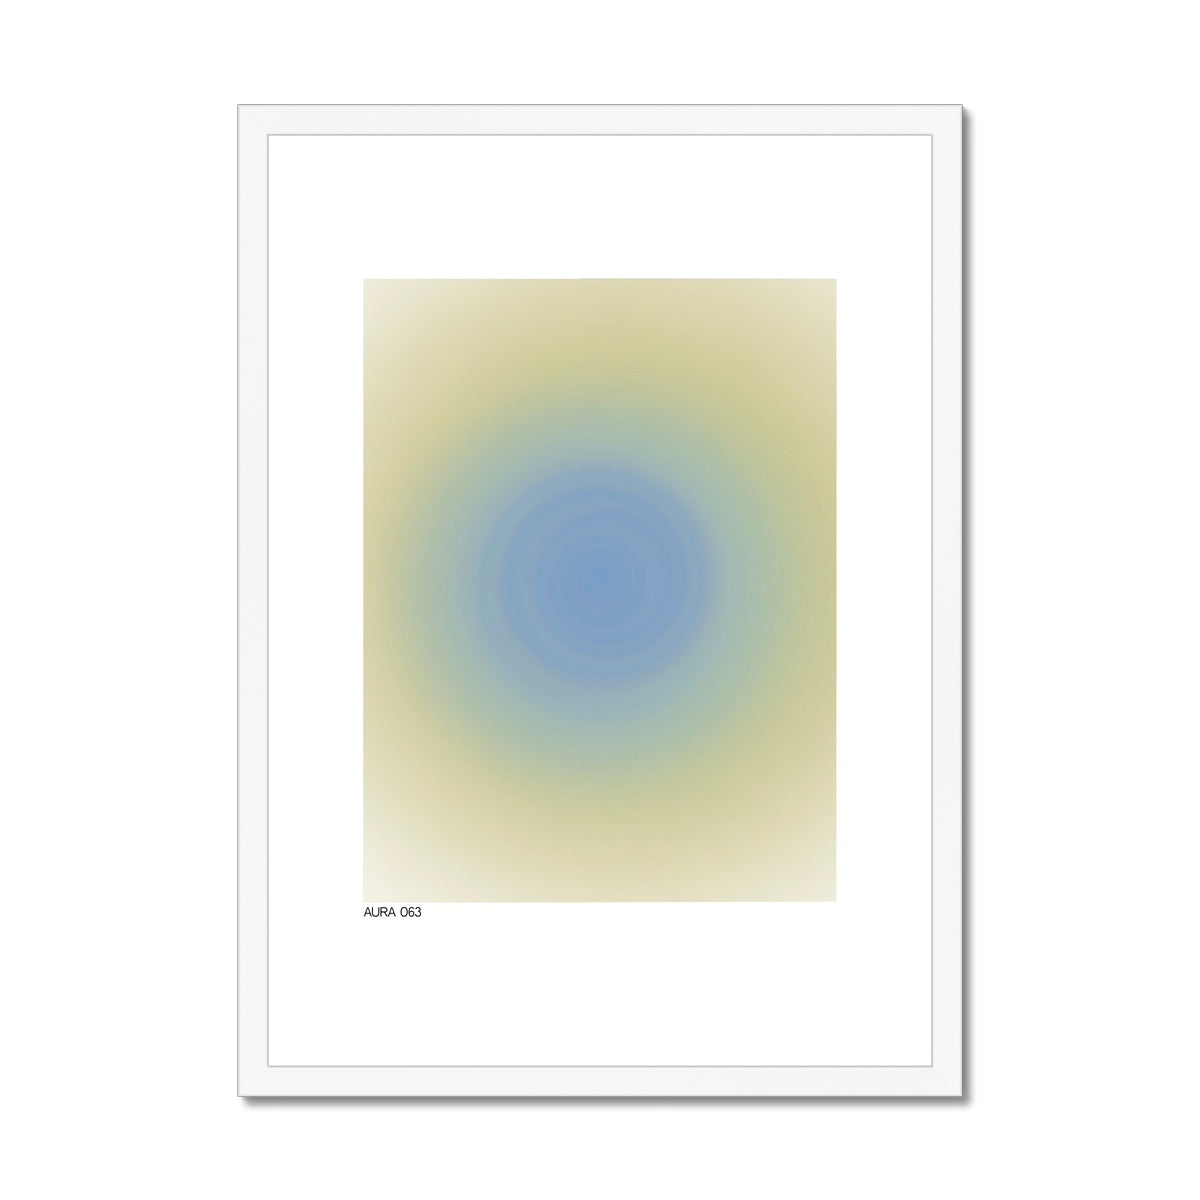 aura 063 Framed & Mounted Print